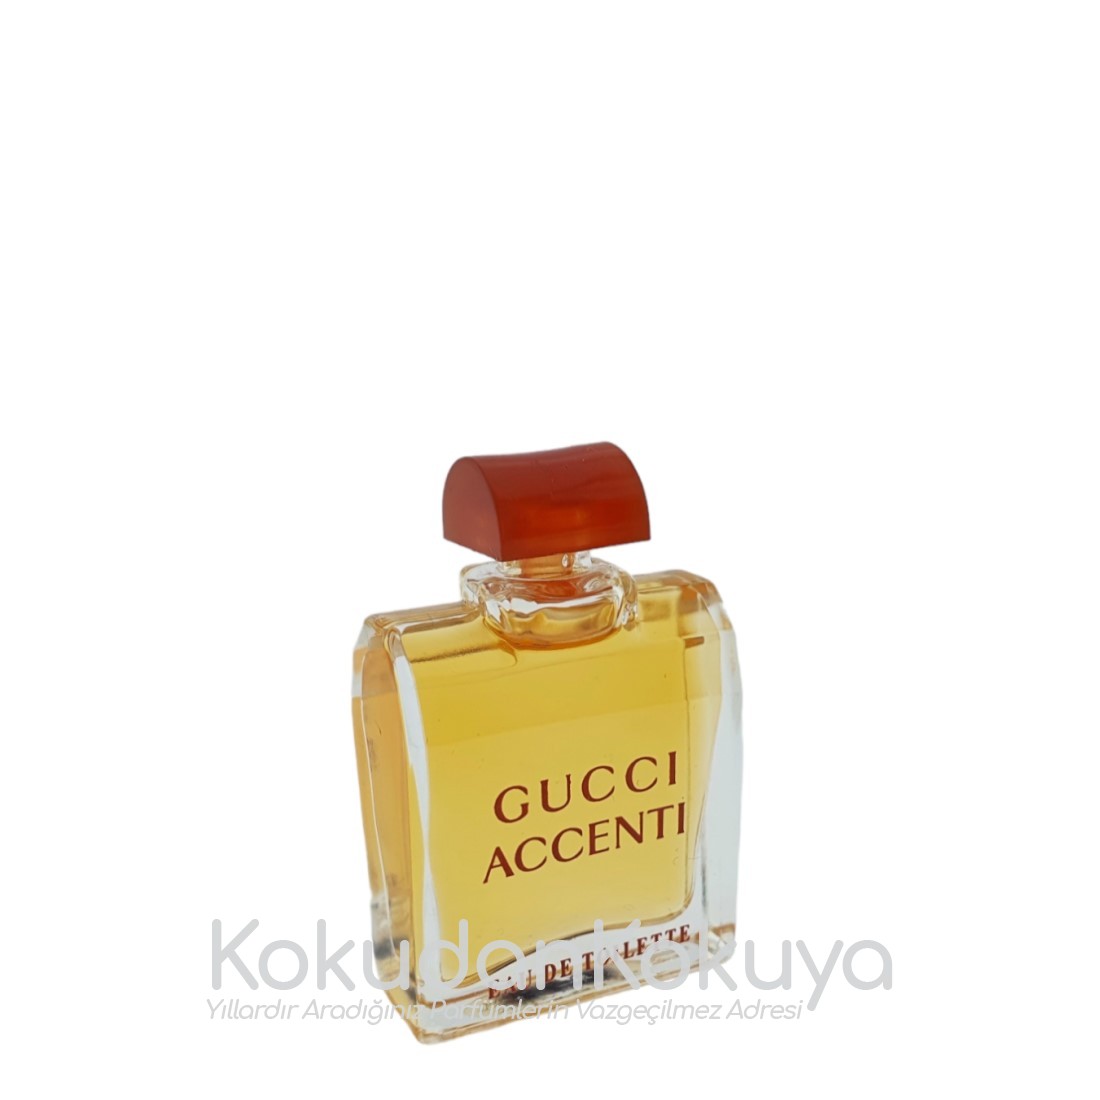 GUCCI Accenti (Vintage) Parfüm Kadın 5ml Minyatür (Mini Perfume) Dökme 